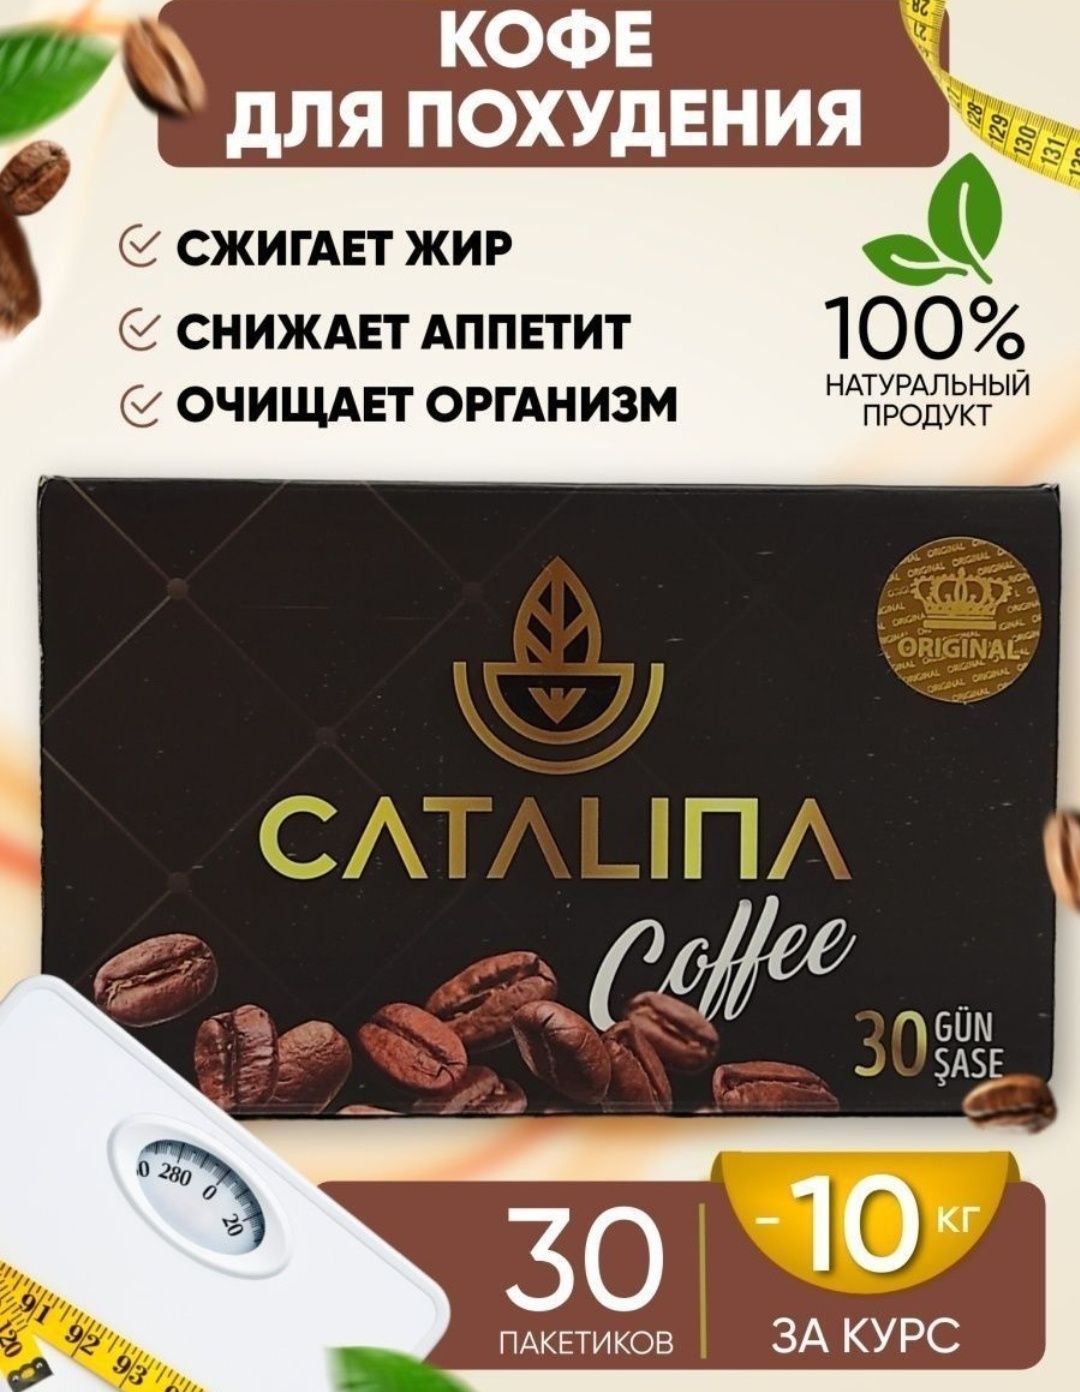 Catalina kofe ozish uchun. Каталина кофе для похудения